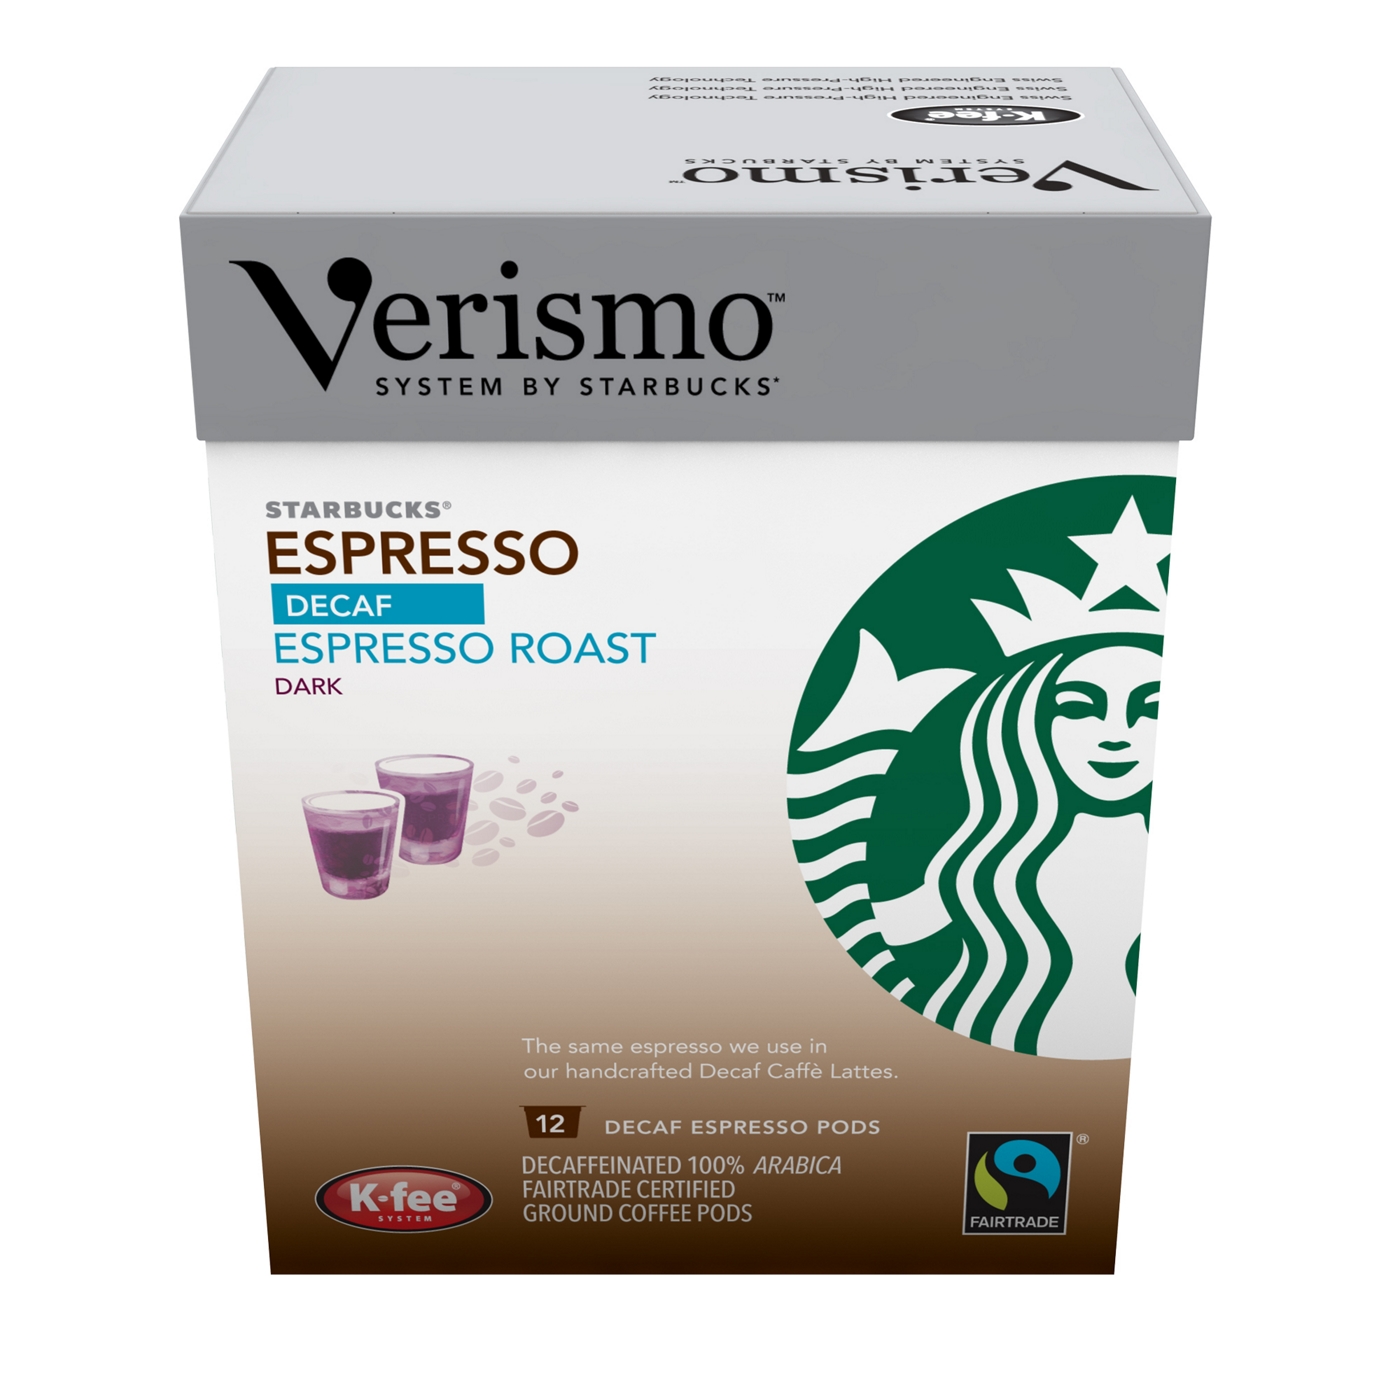 Starbucks Verismo Fairtrade Decaf Espresso Roast Coffee Pods